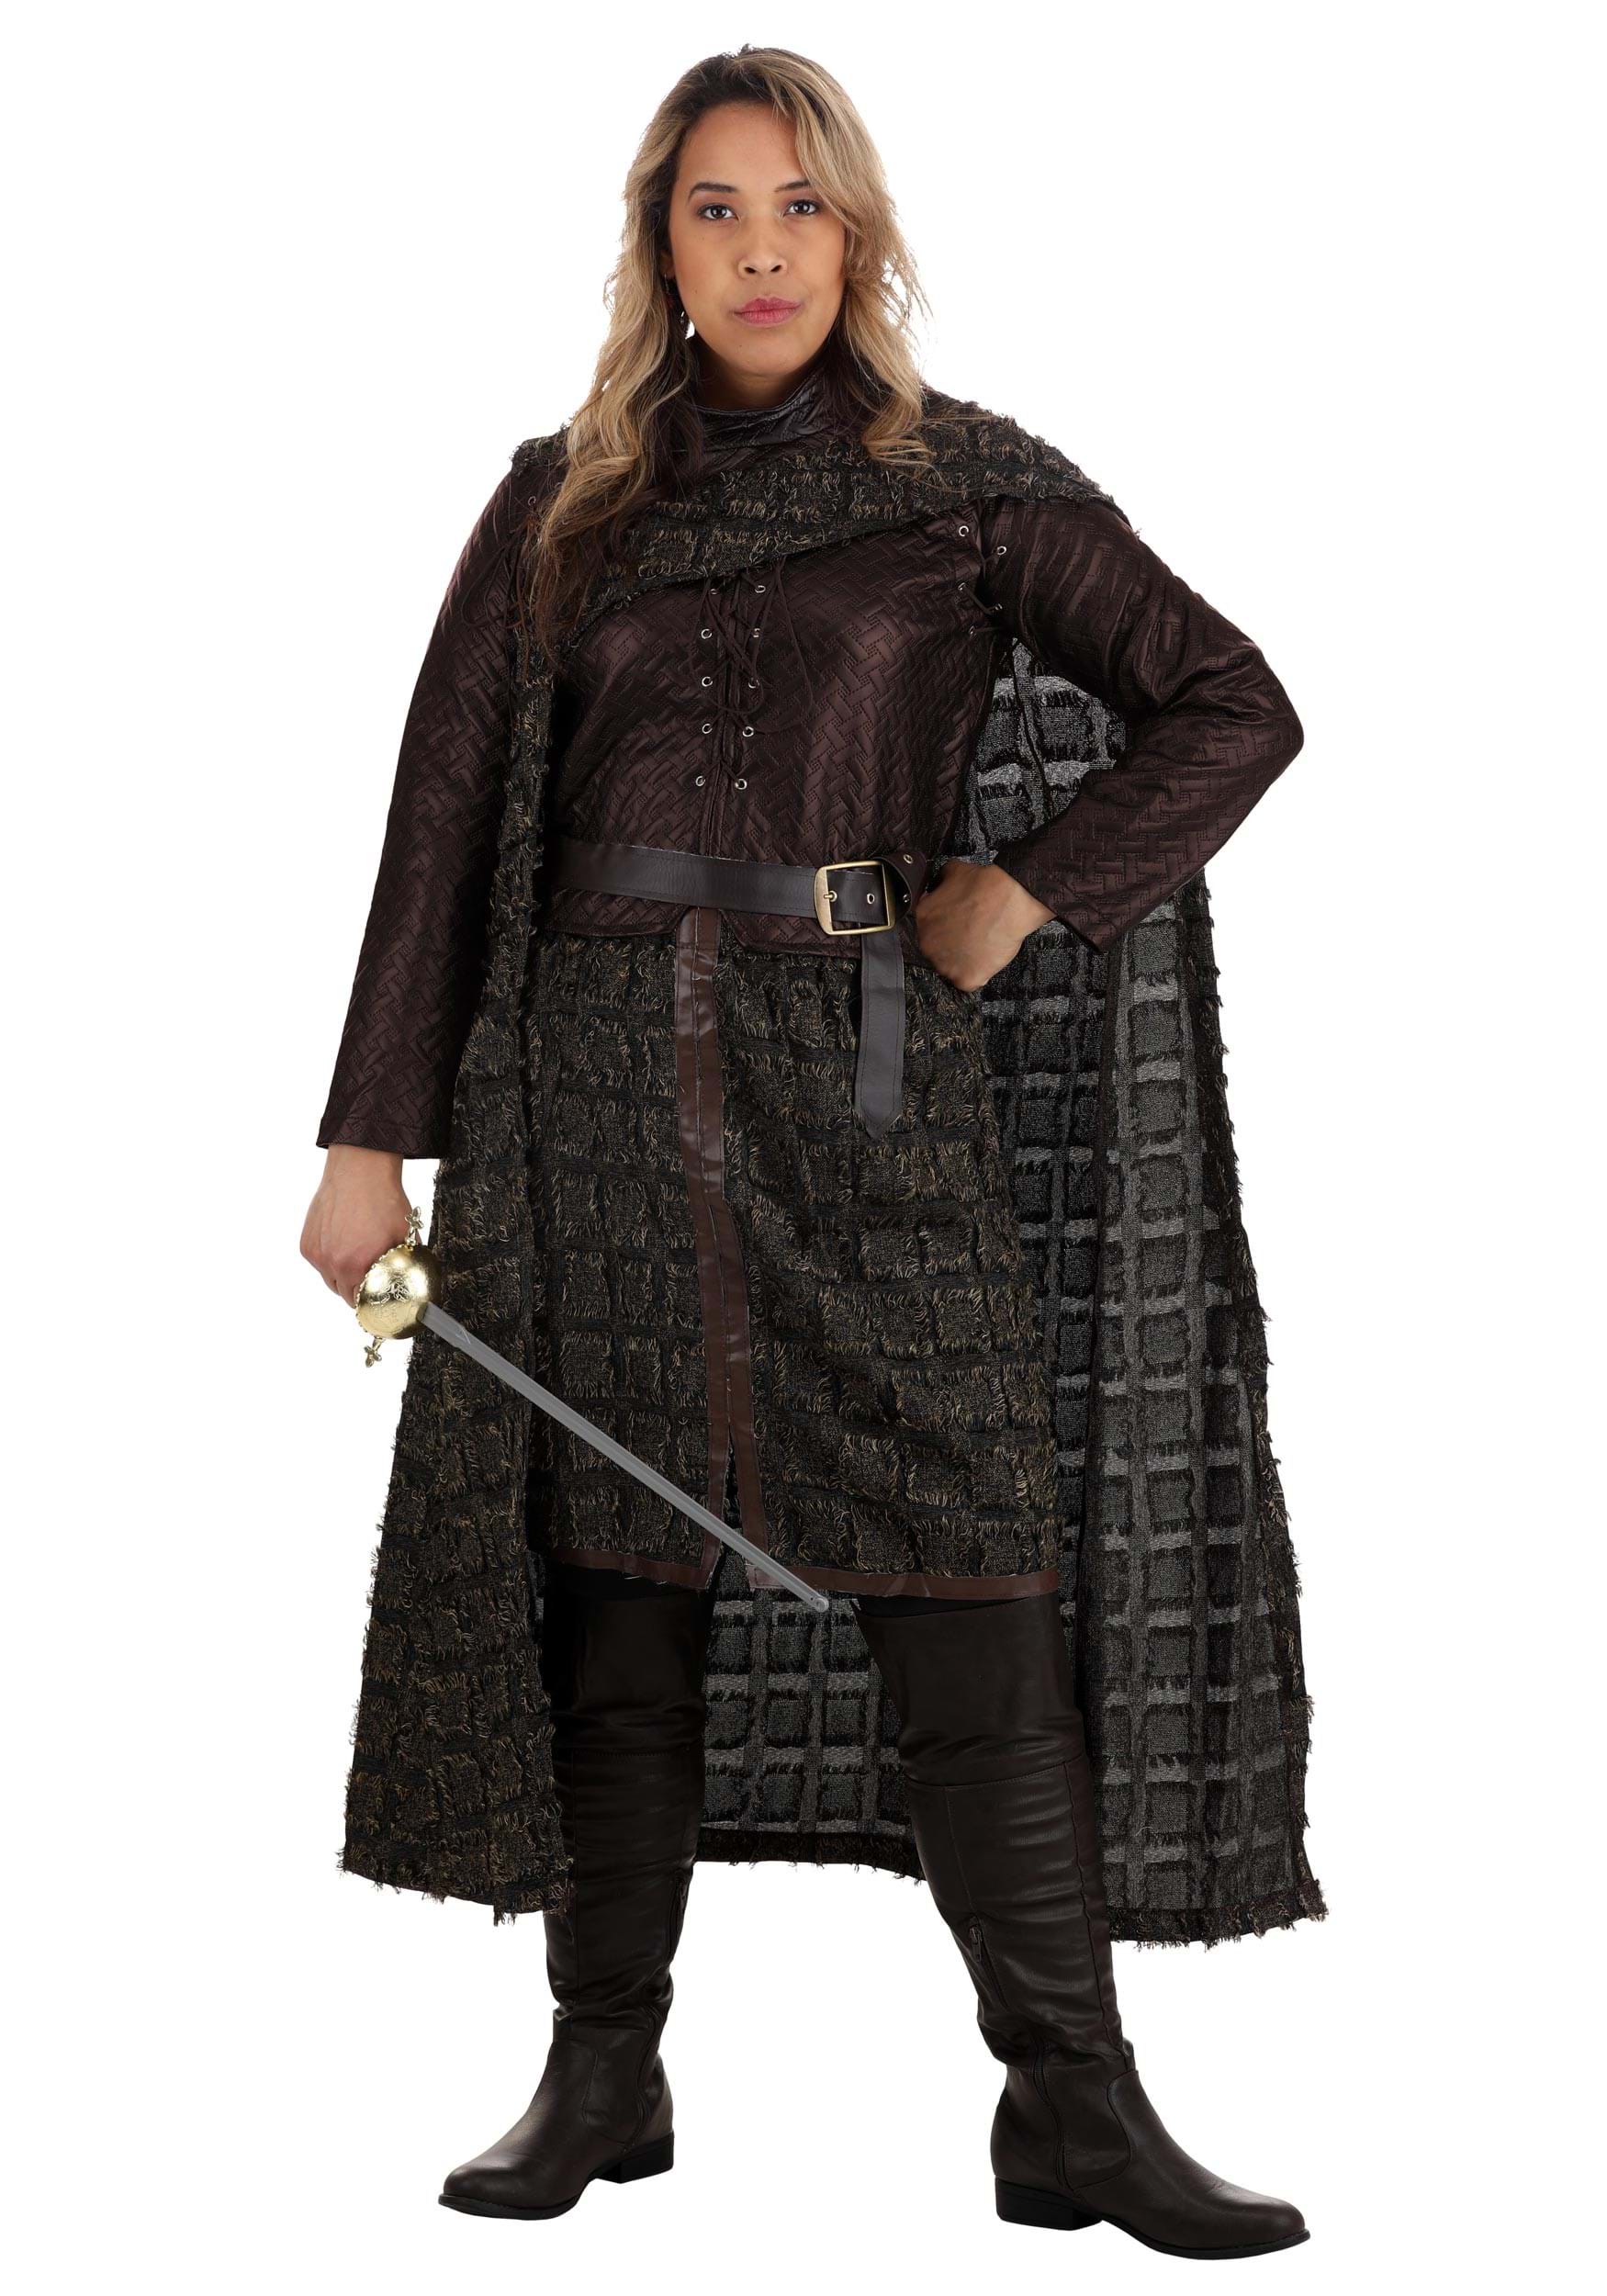 Women's Winter Warrior Costume With Cape & Jacket